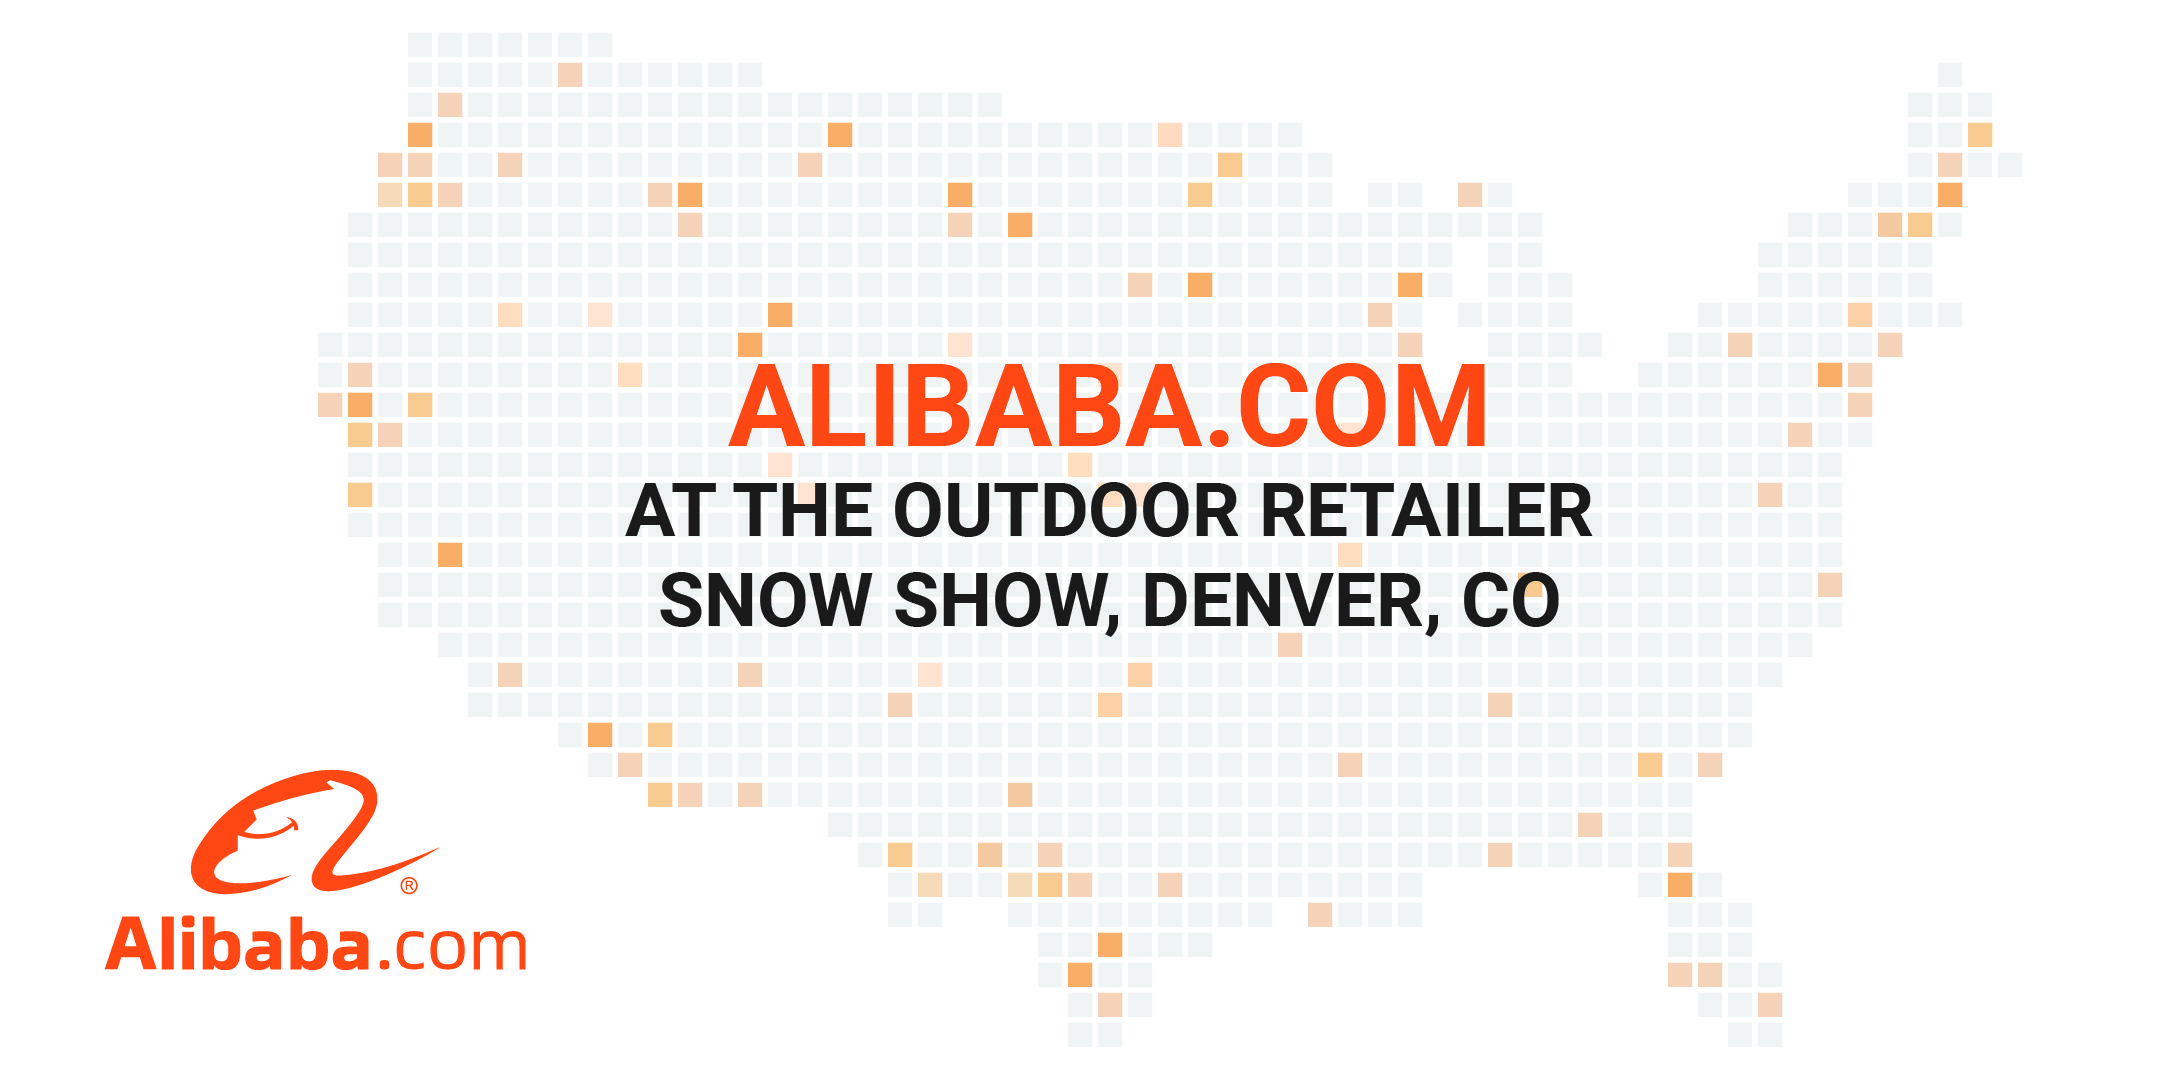 Alibaba.com at Outdoor Retailer Snow Show, Denver, CO